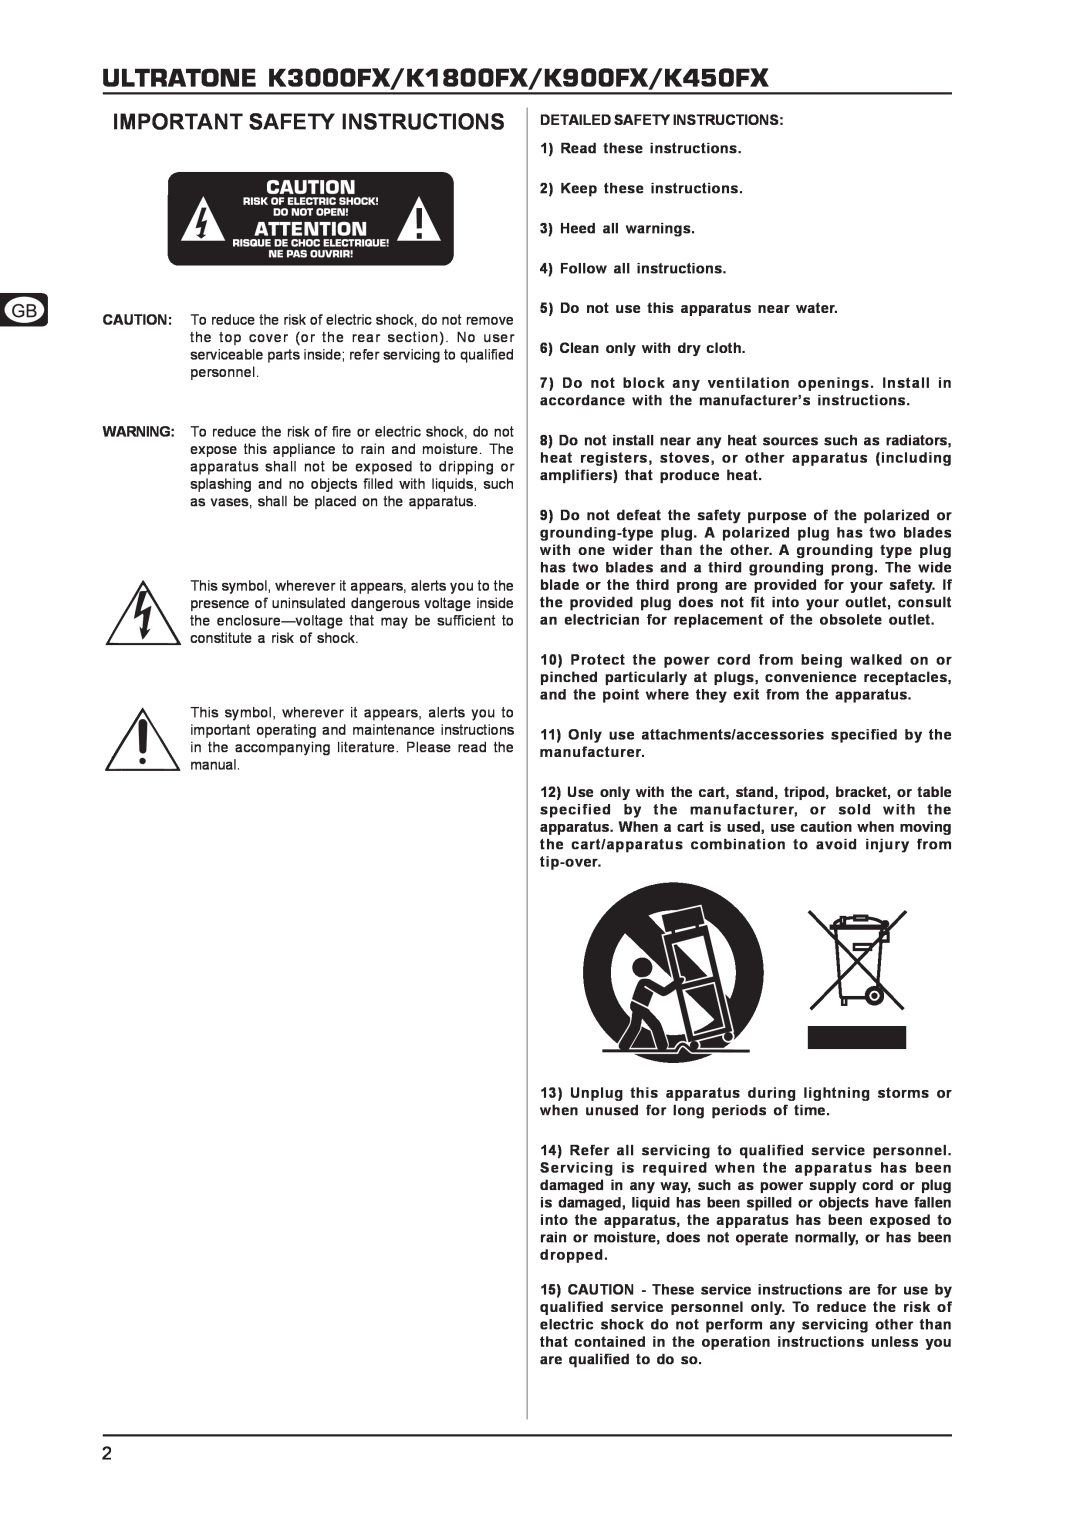 Behringer user manual ULTRATONE K3000FX/K1800FX/K900FX/K450FX, Important Safety Instructions 